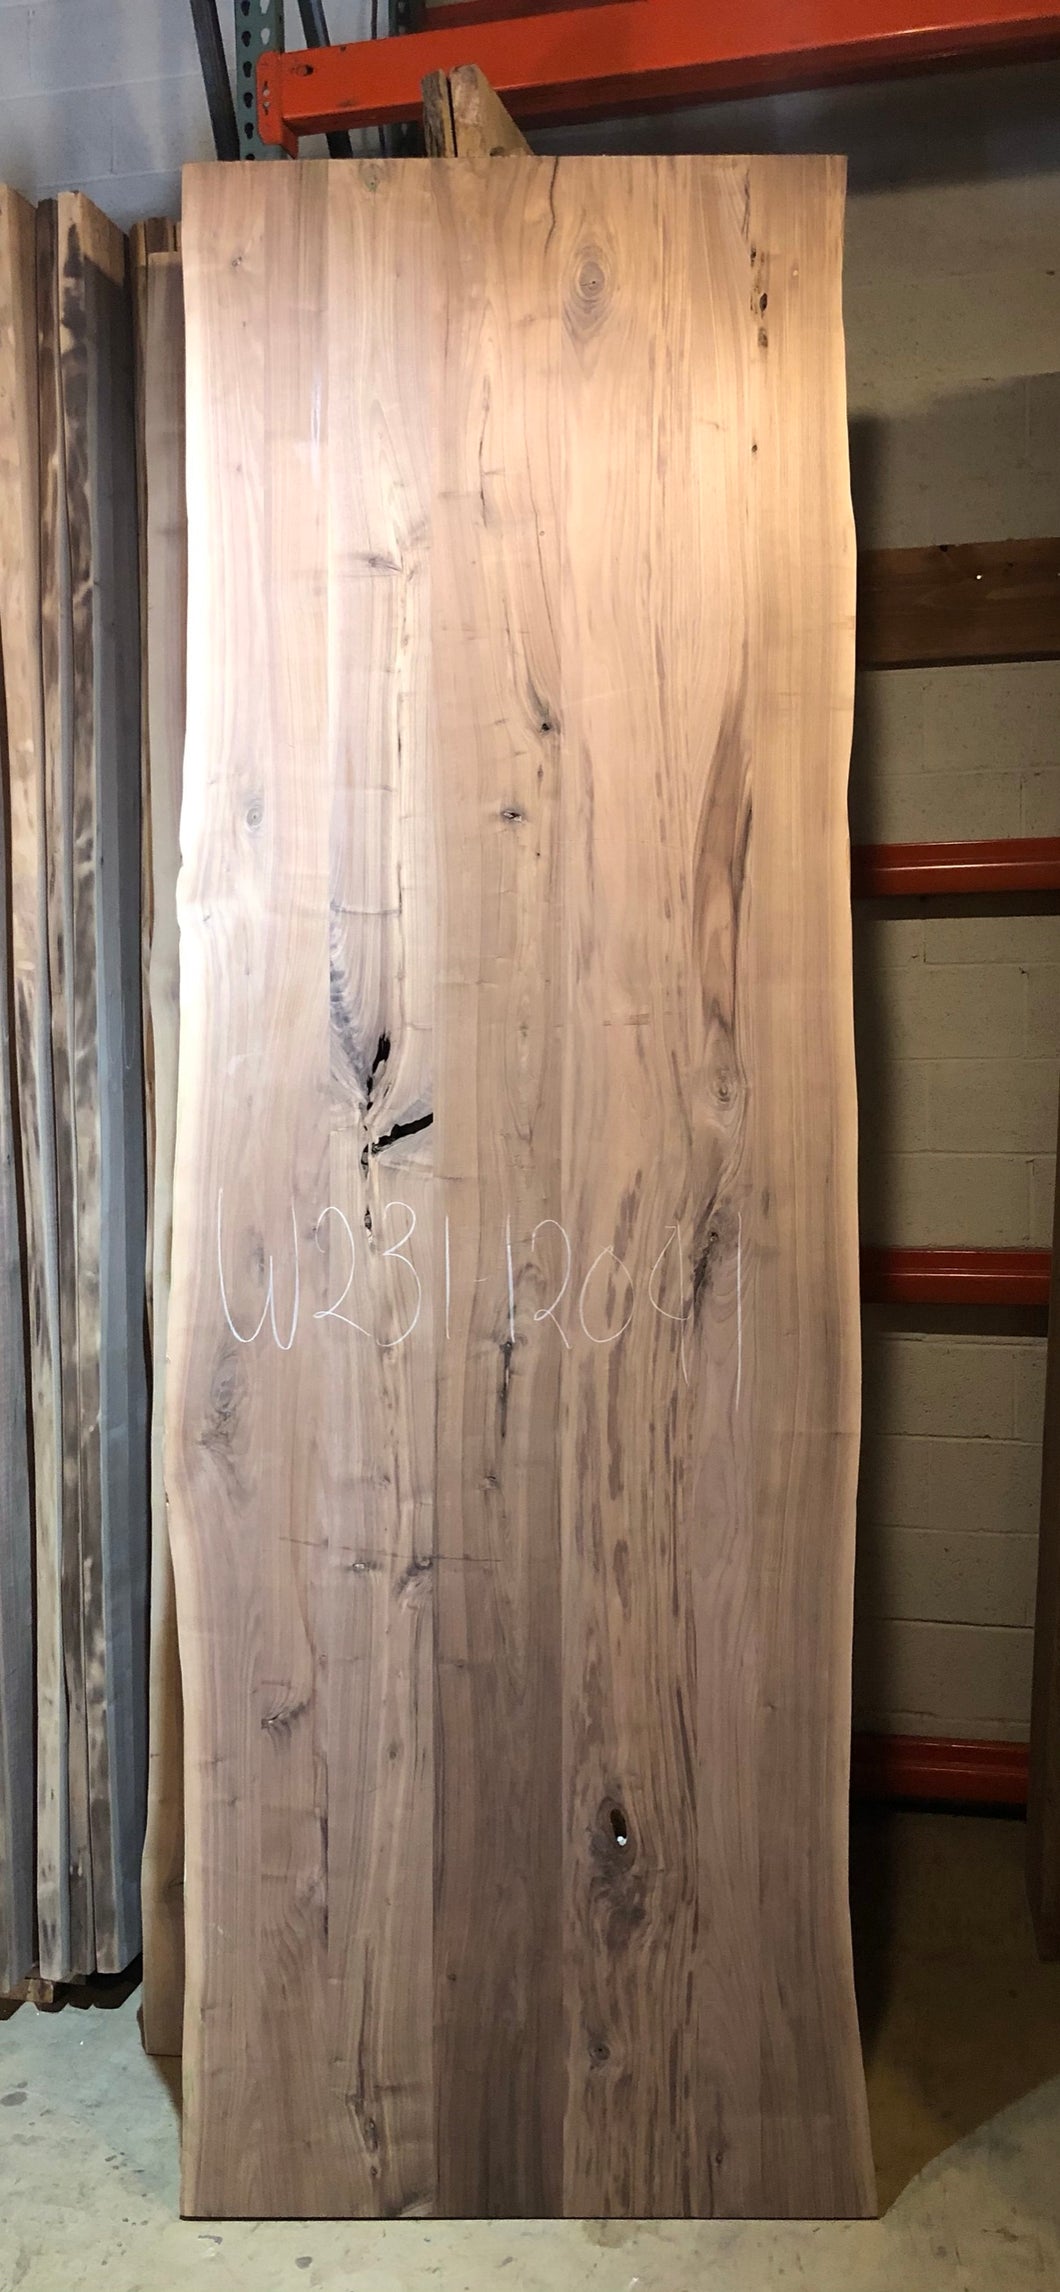 W231-12041 Live edge walnut wood 120x41